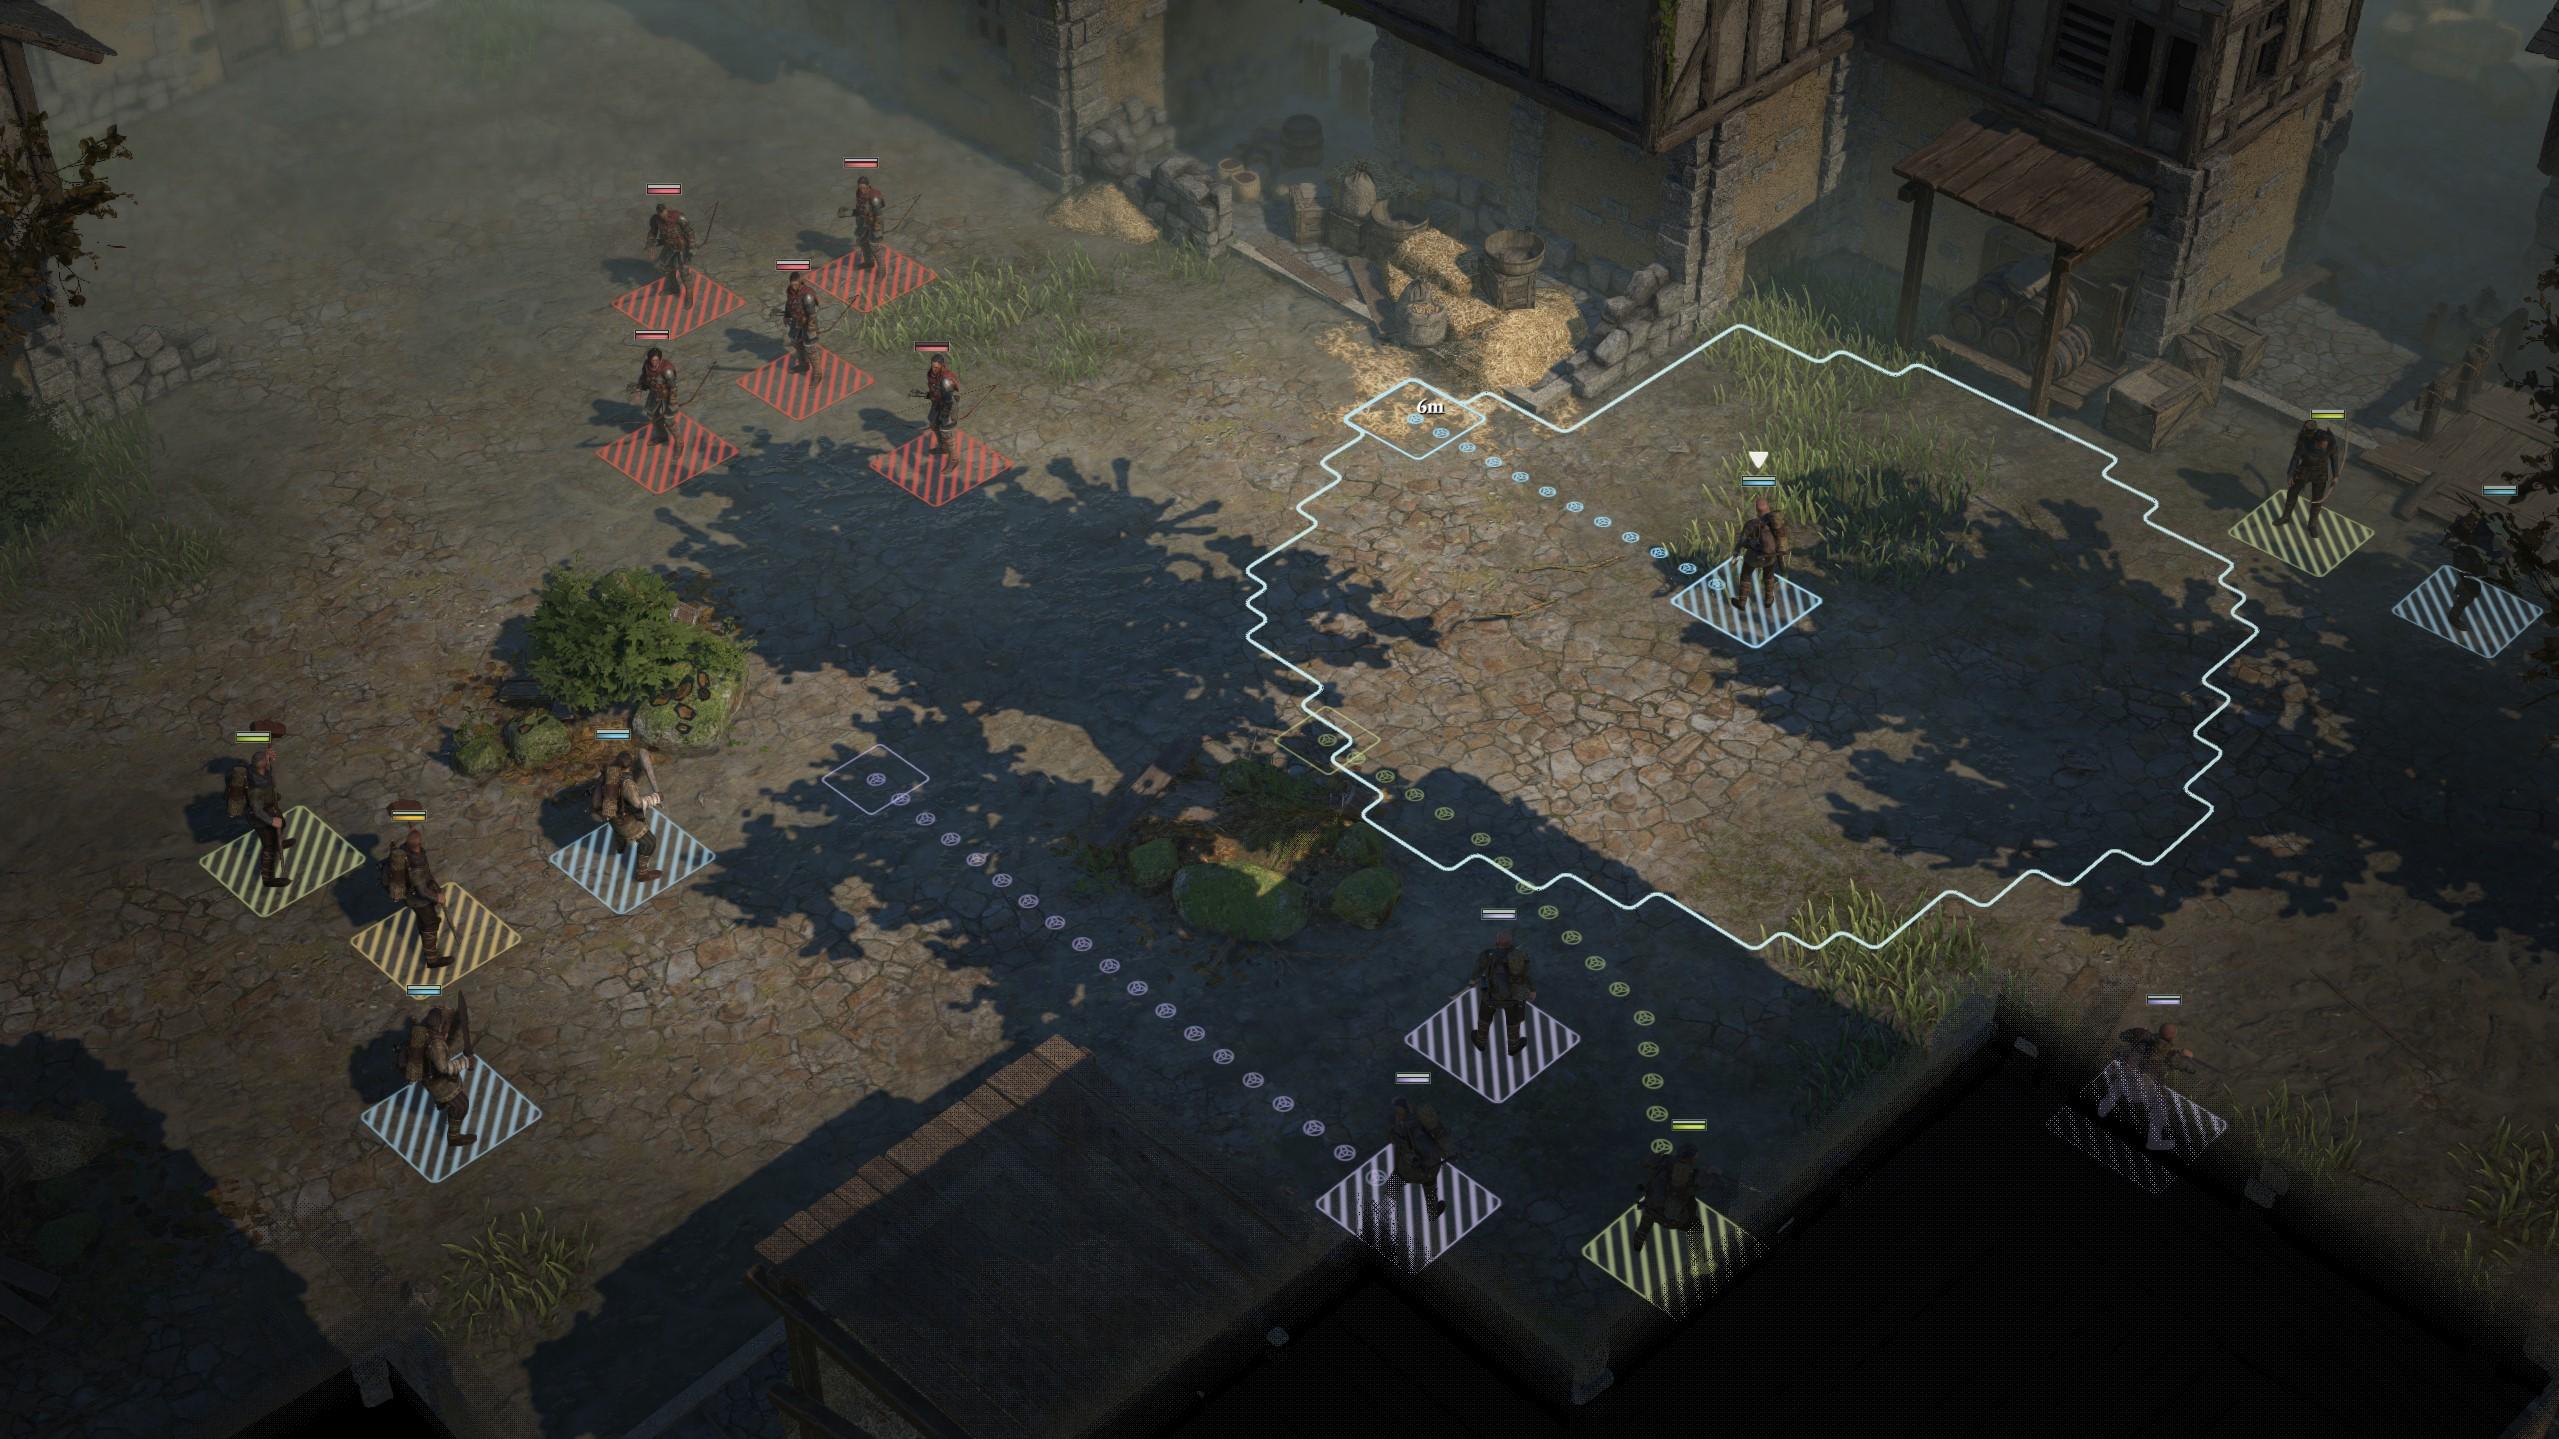 Mercenaries fighting off bandits invading a town in 'Wartales'